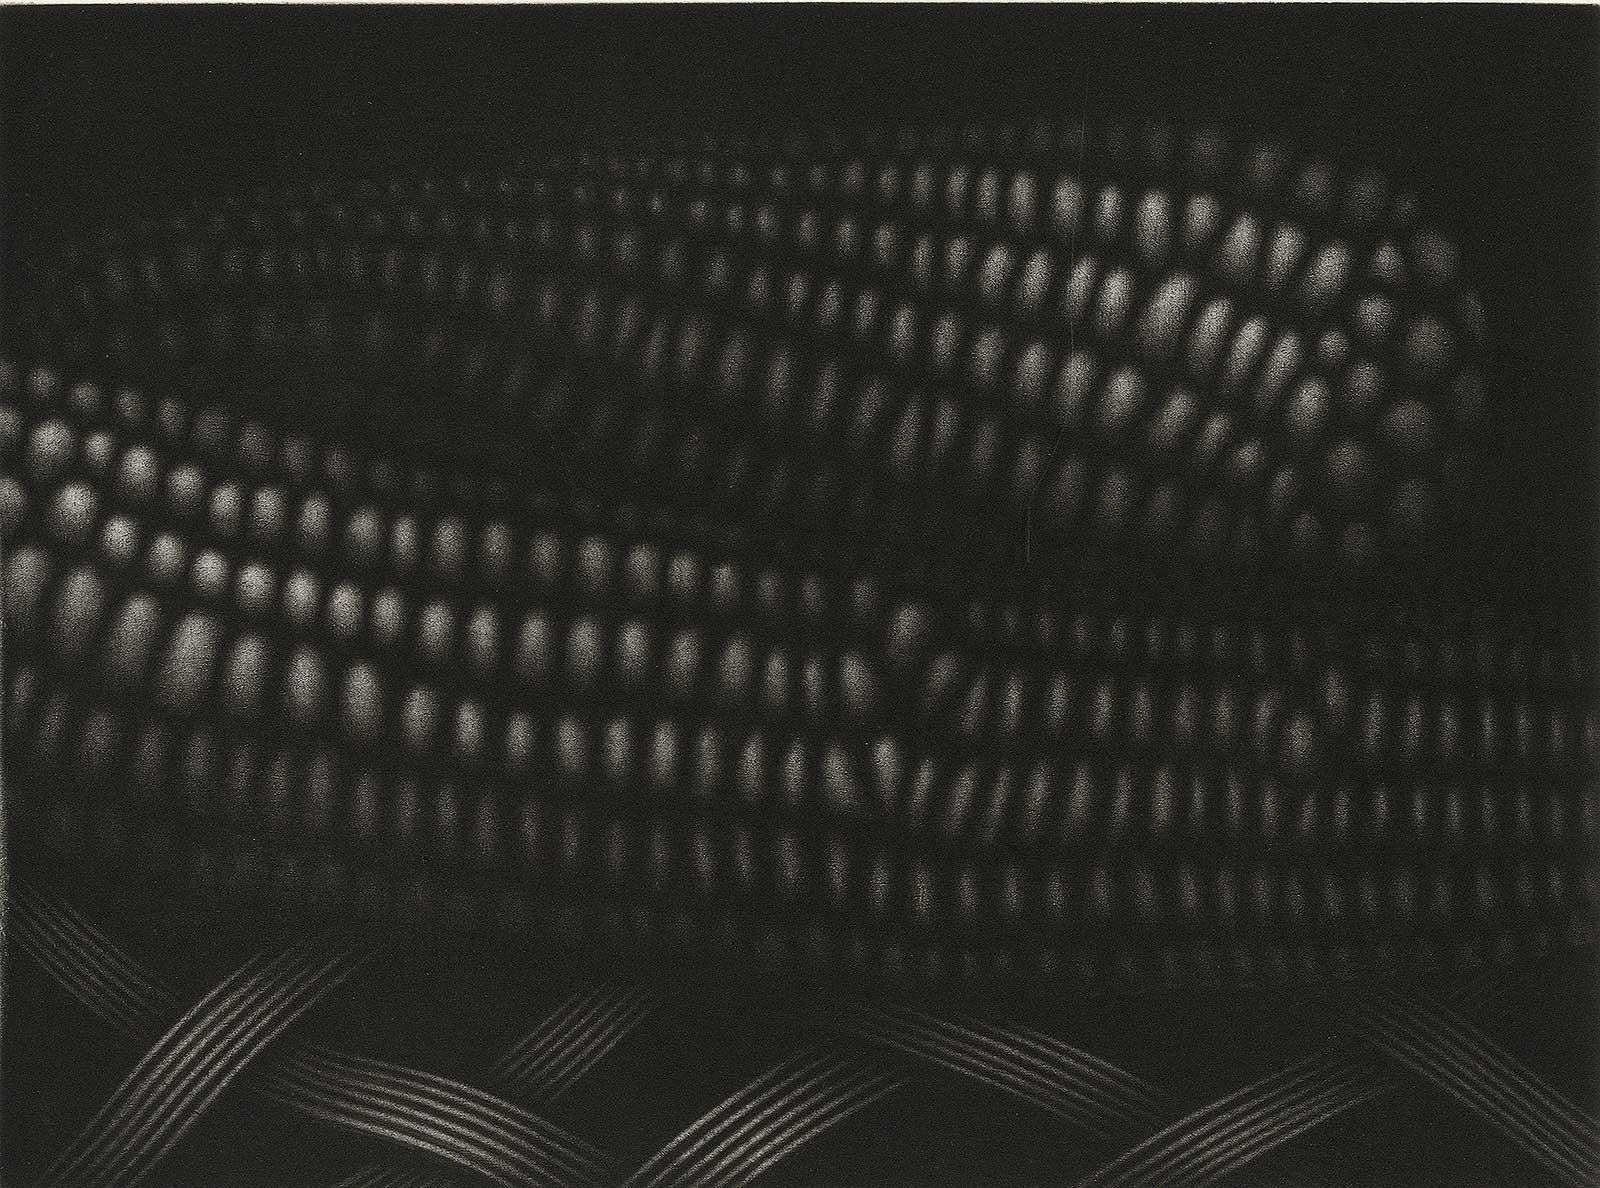 Laurent Schkolnyk Interior Print - Le Mais (Corn on the cob) in woven basket)